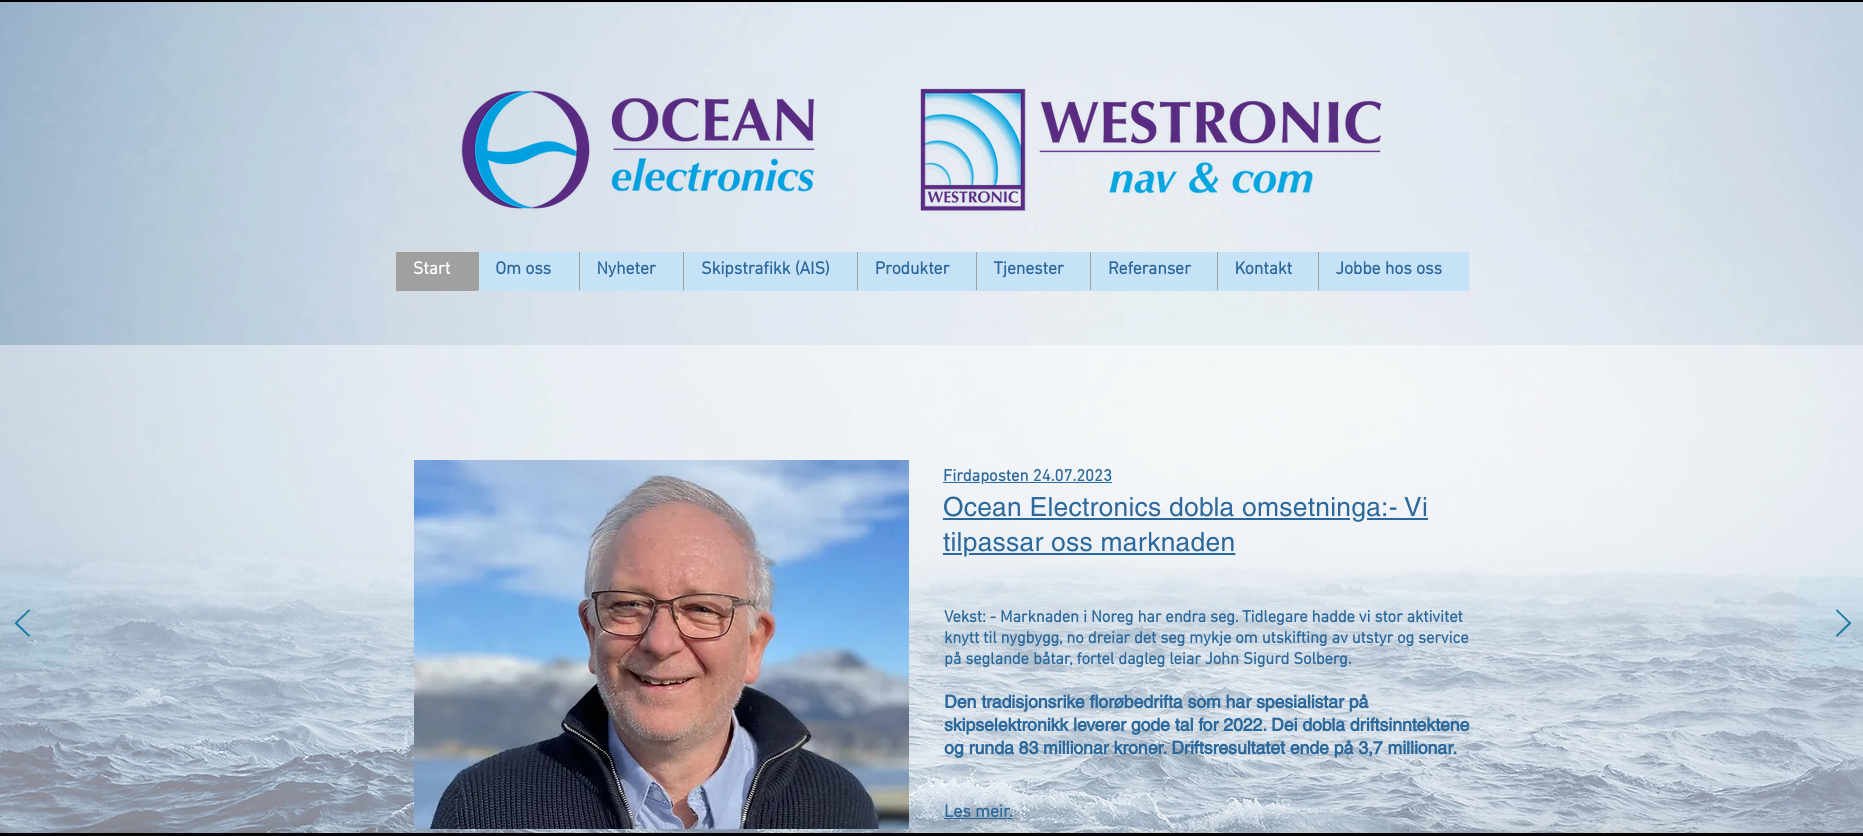 oceanelectronics.no presentation